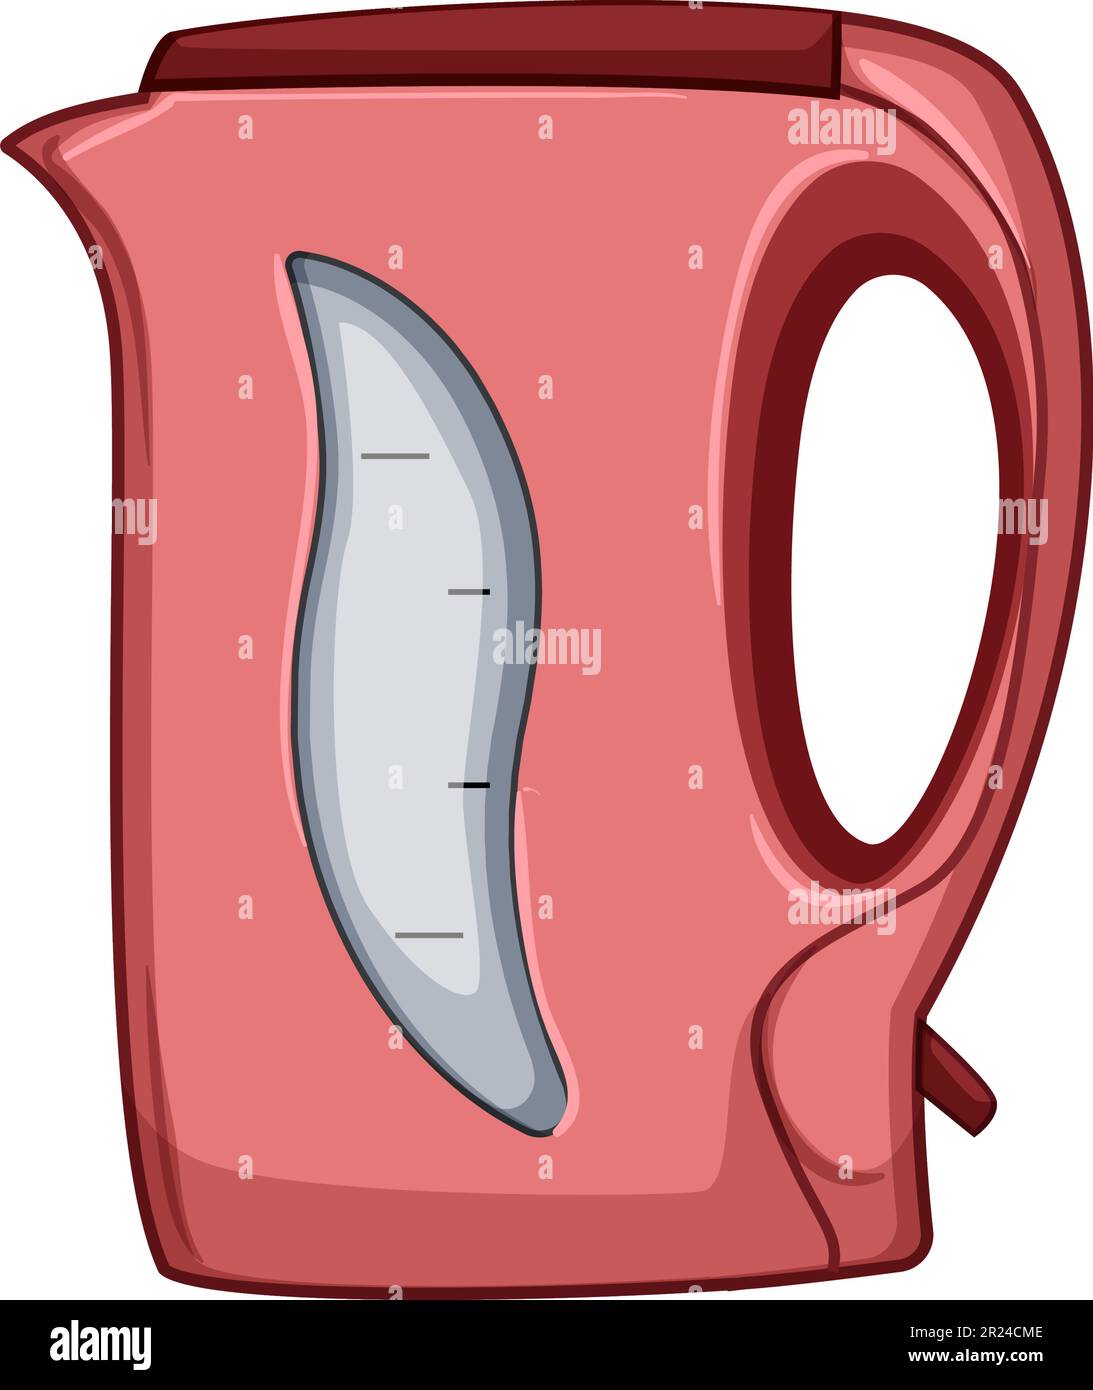 hot electric kettle cartoon vector illustration Stock Vector